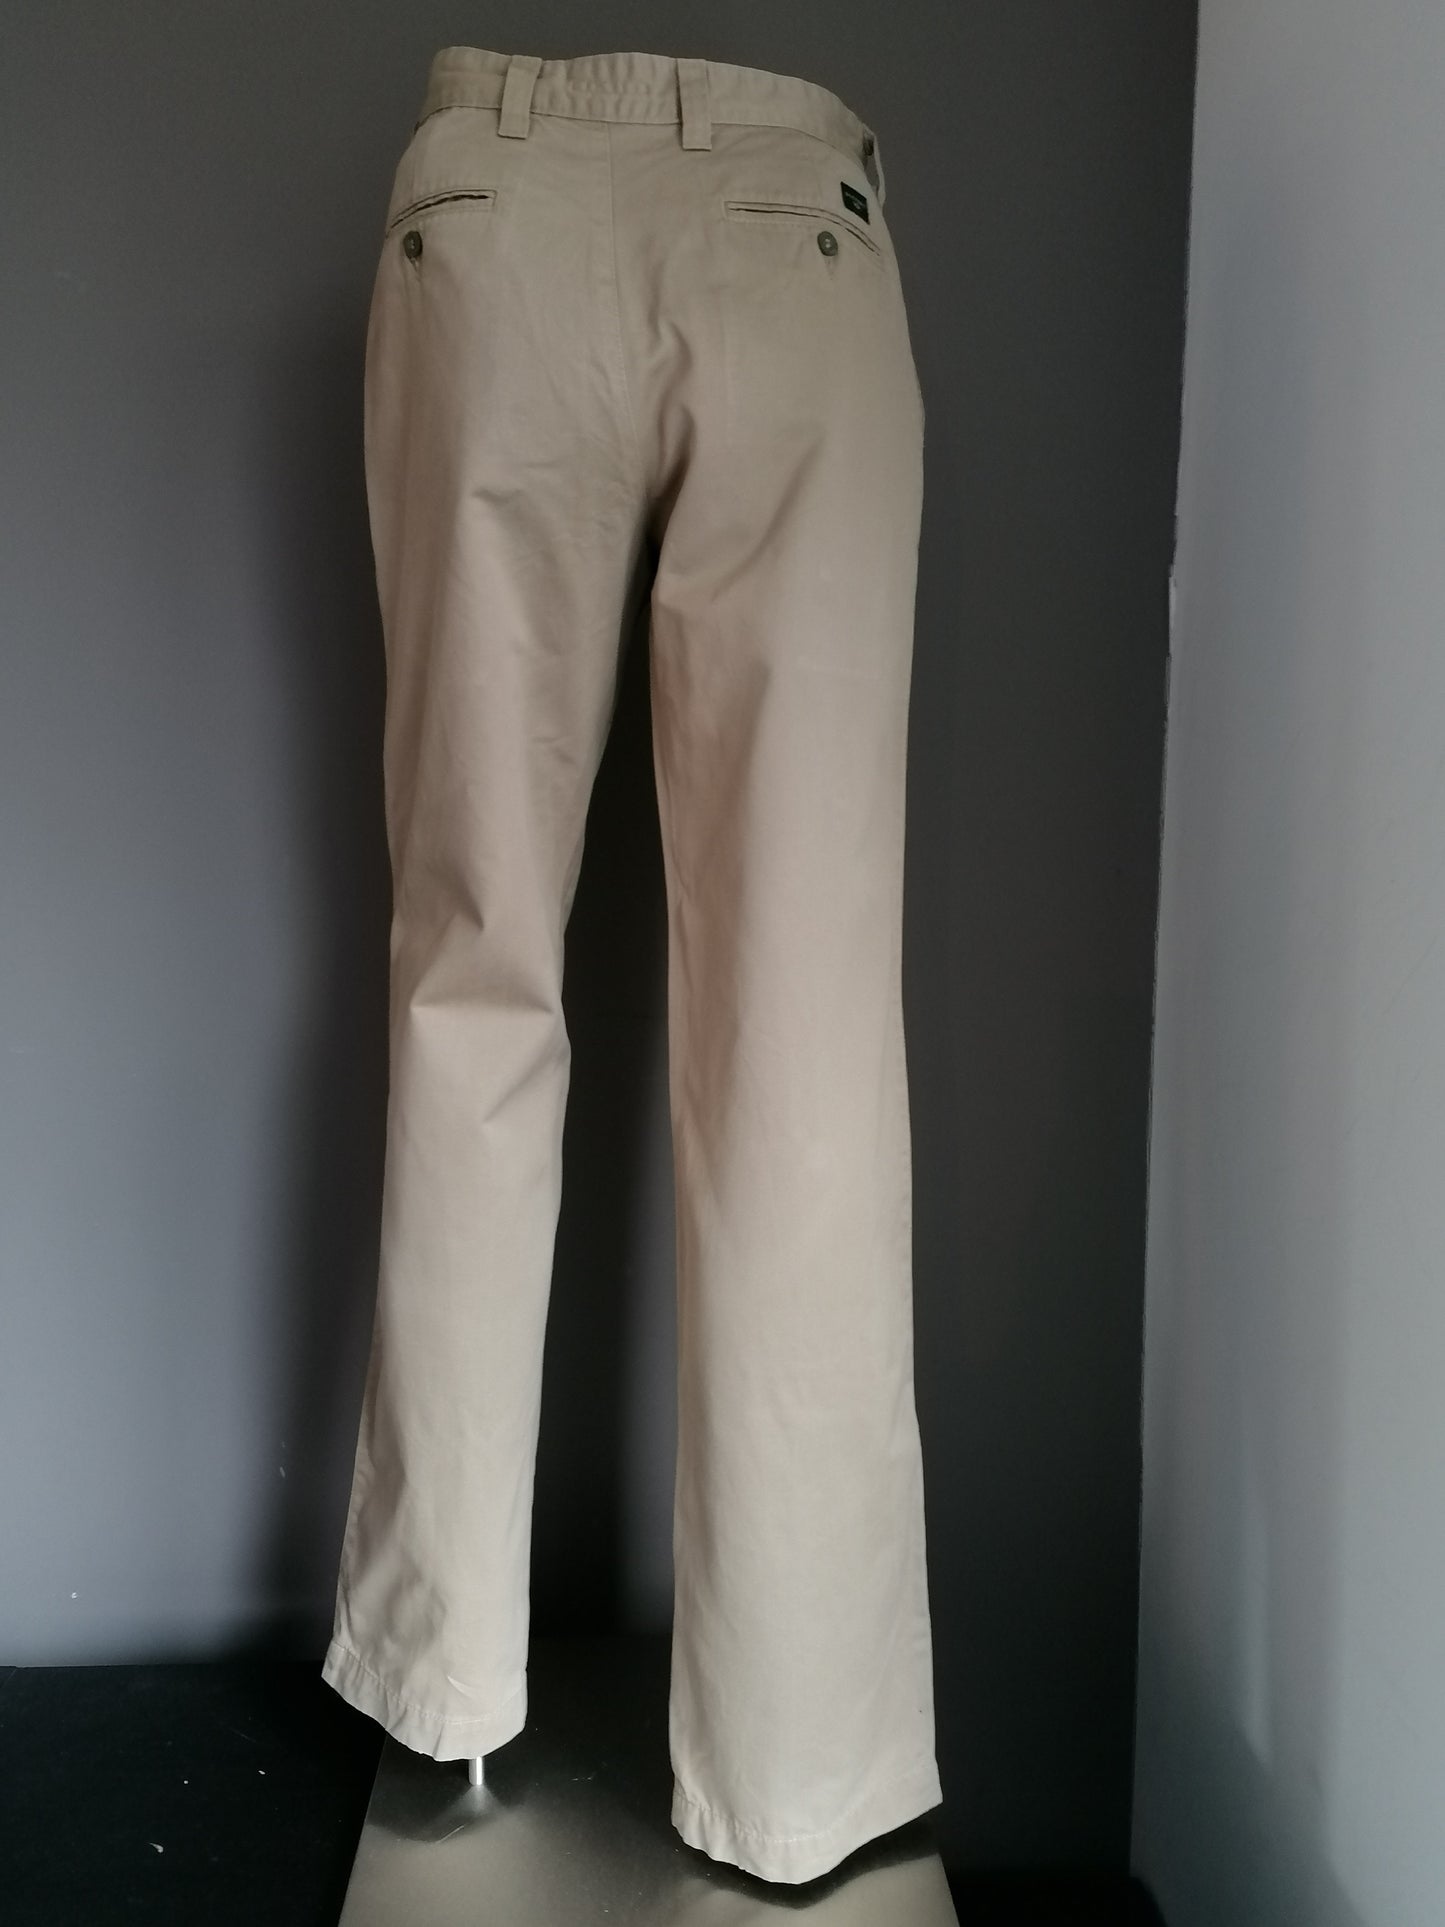 Dockers Khaki broek. Beige gekleurd. Maat W32 - L36